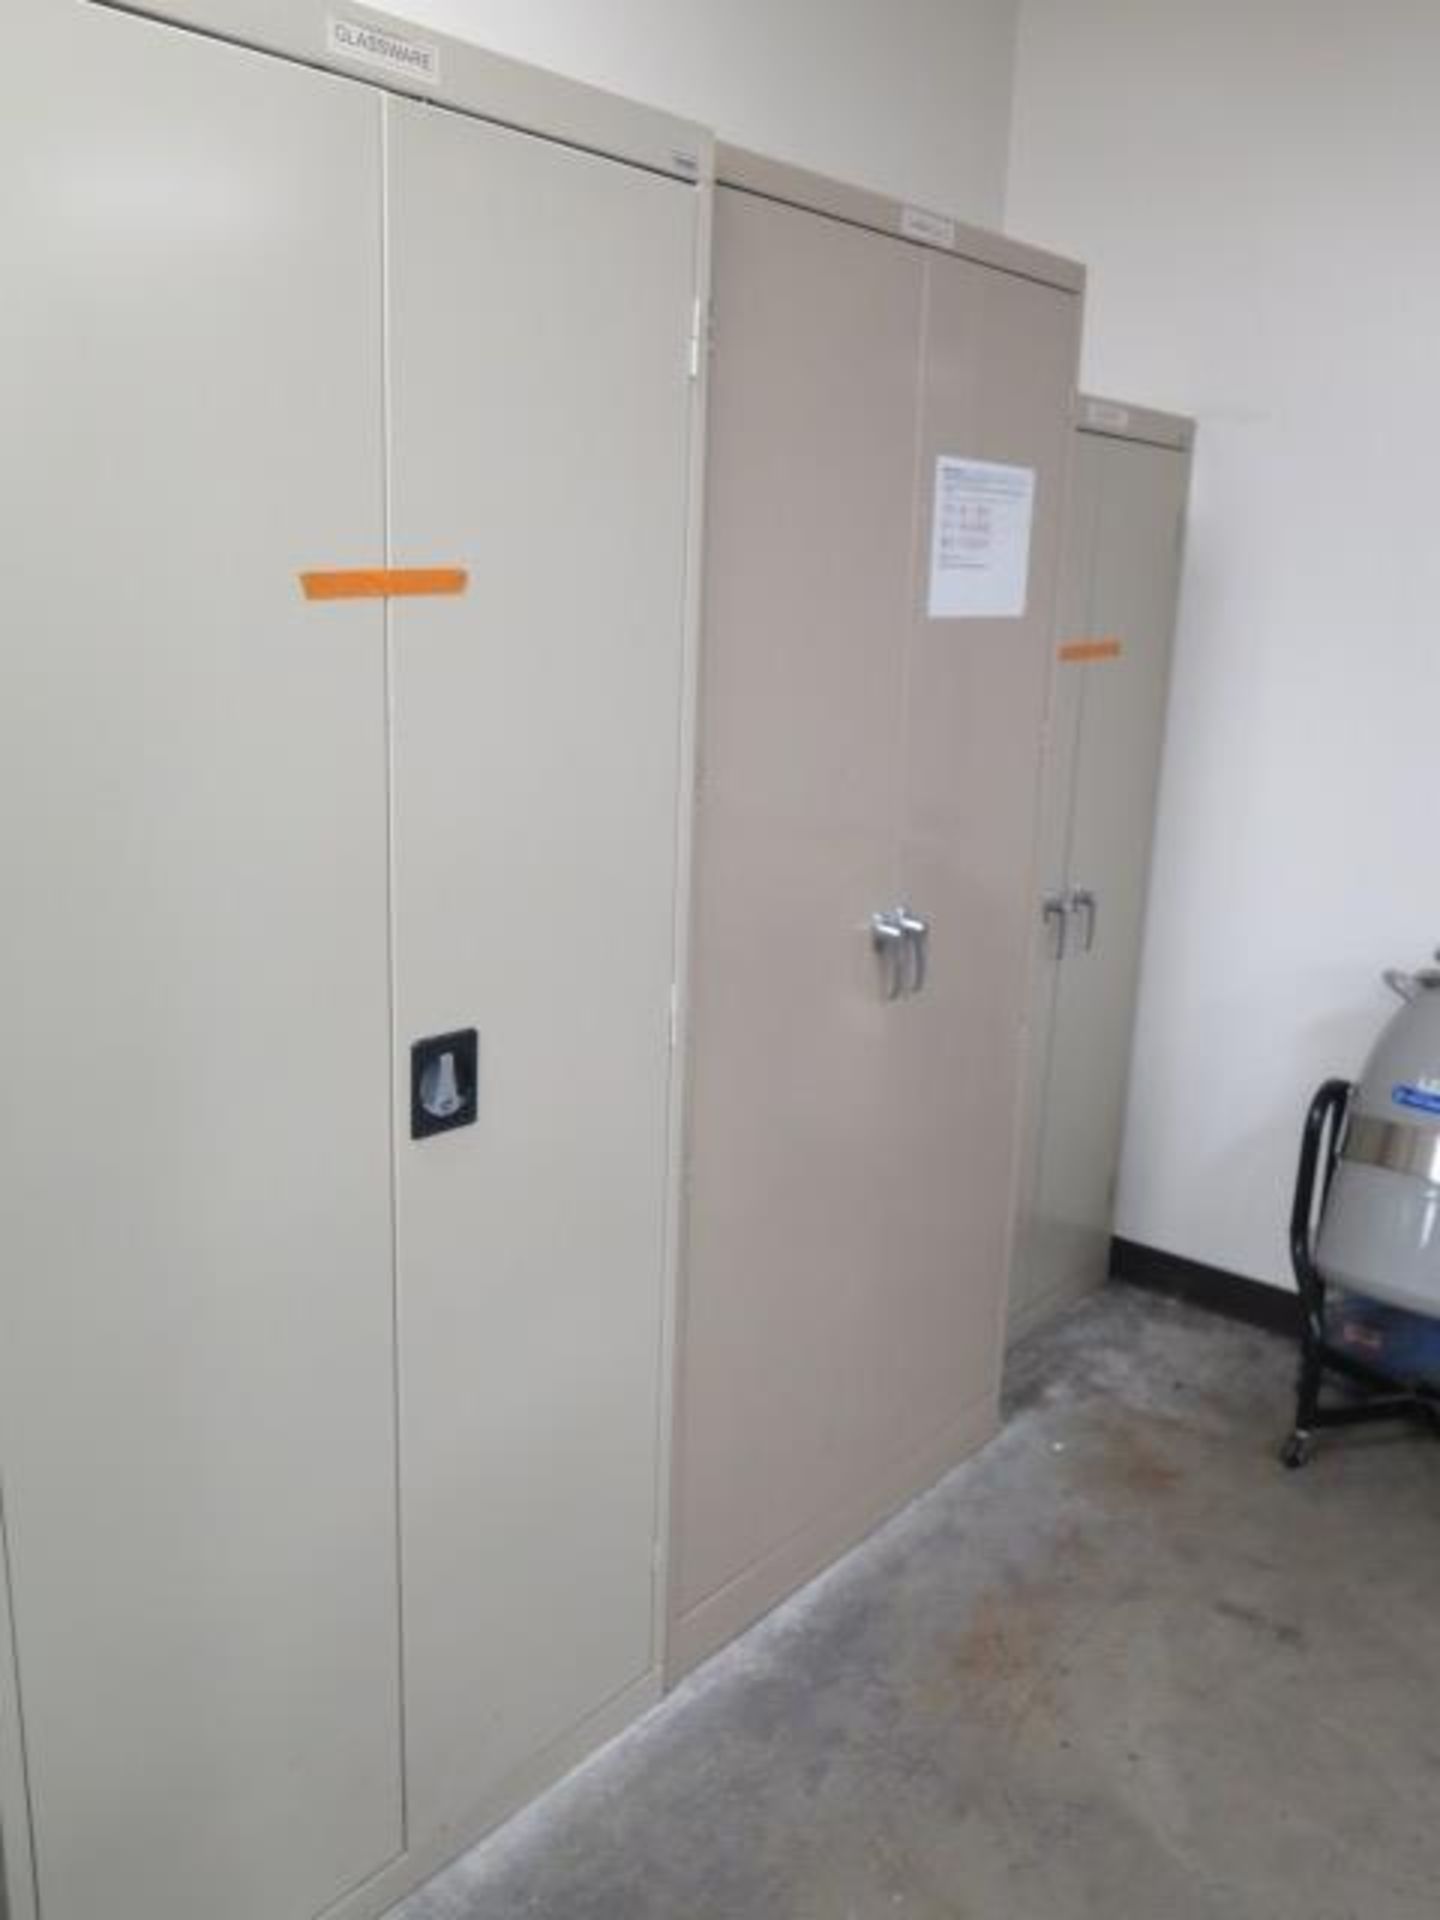 Storage Cabinets (6) - Image 3 of 4